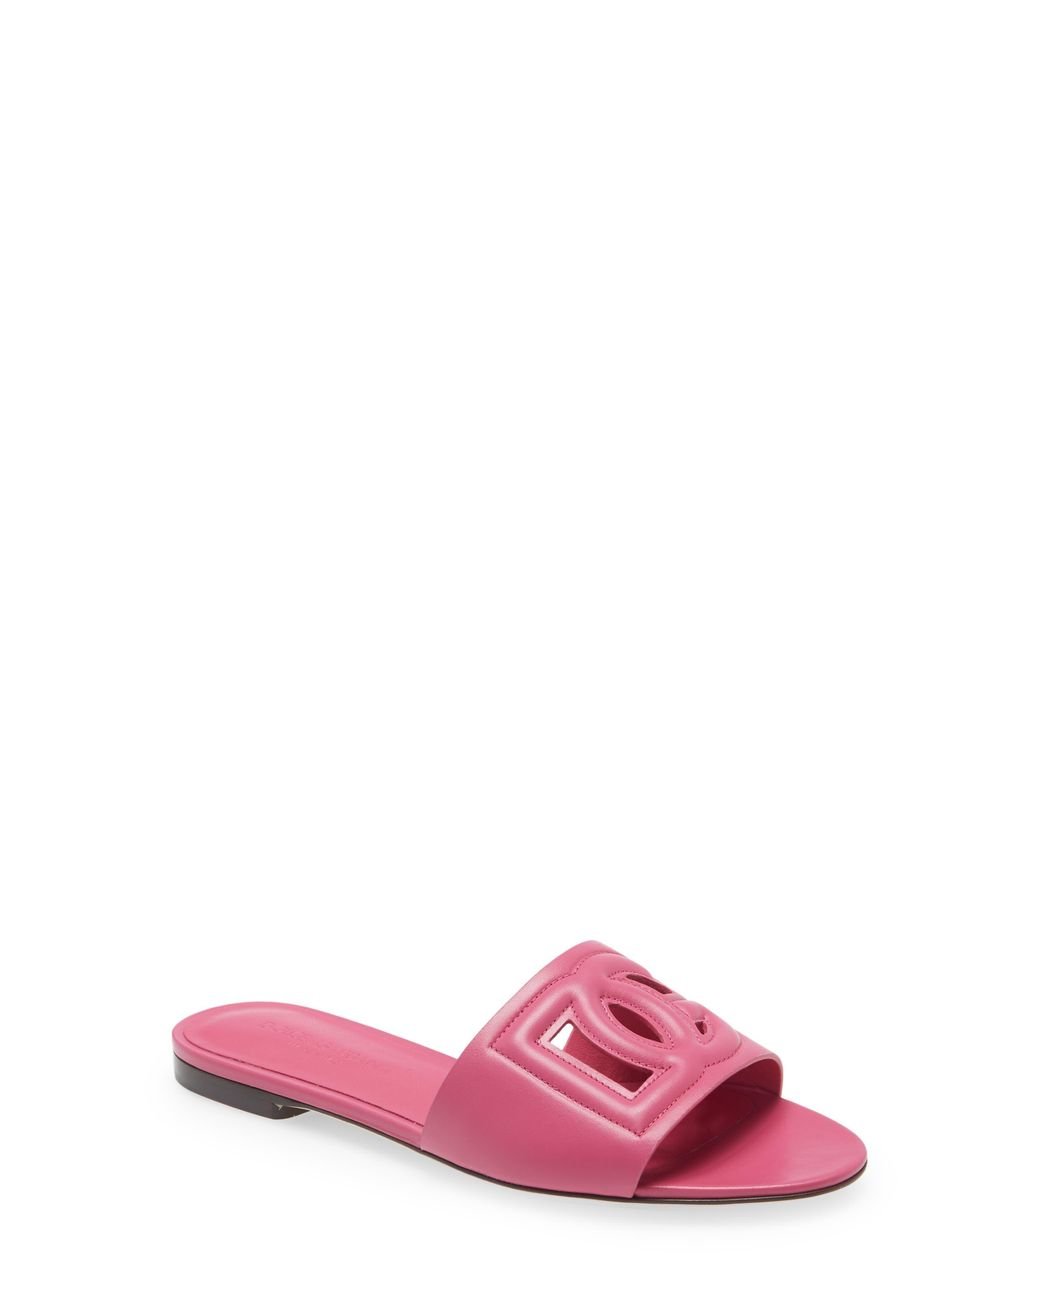 Dolce & Gabbana Bianca Interlock Slide Sandal in Pink | Lyst